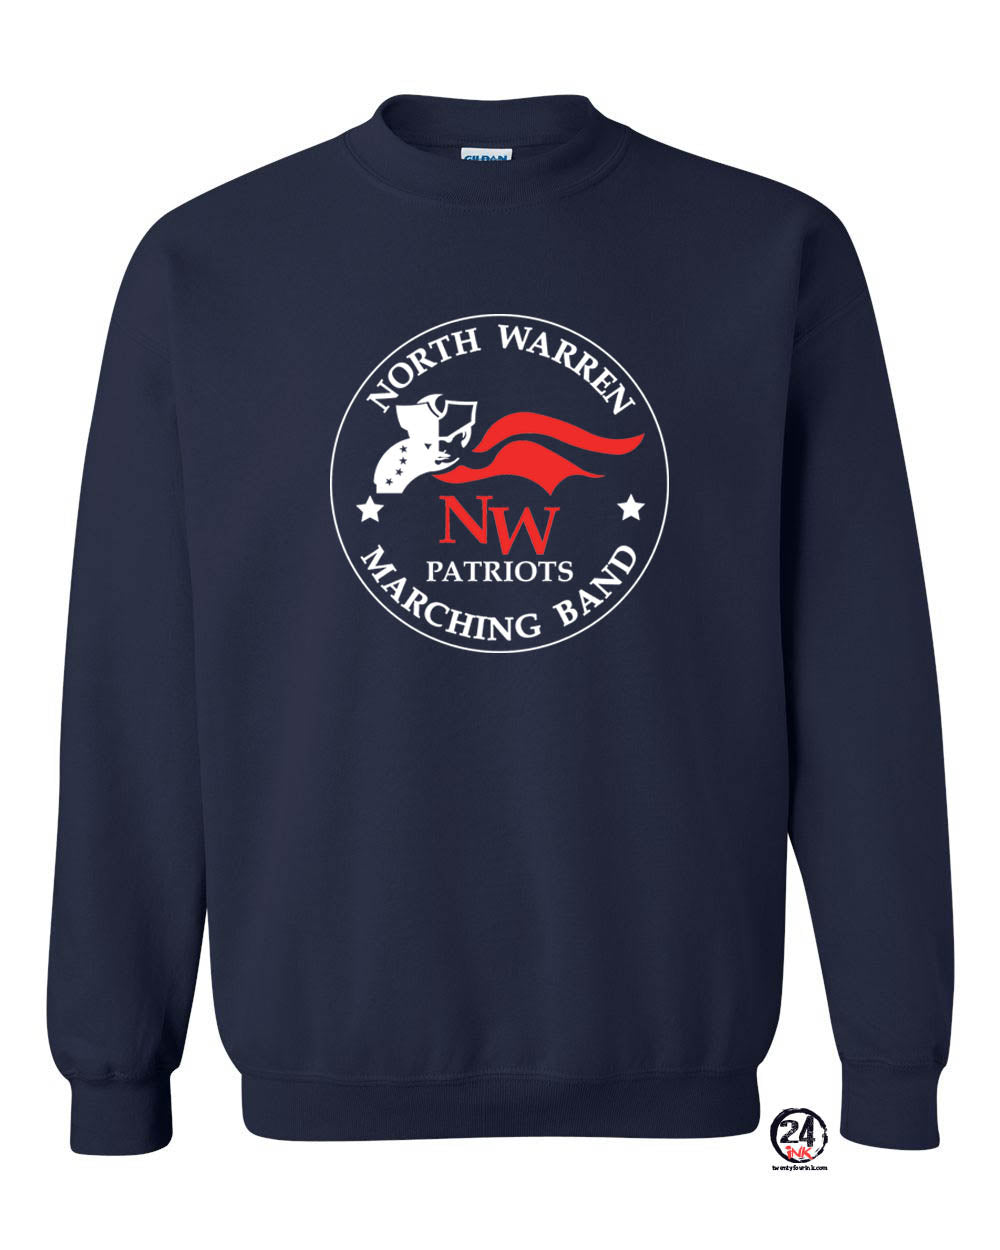 North Warren Marching Band Design 6 non hooded sweatshirt